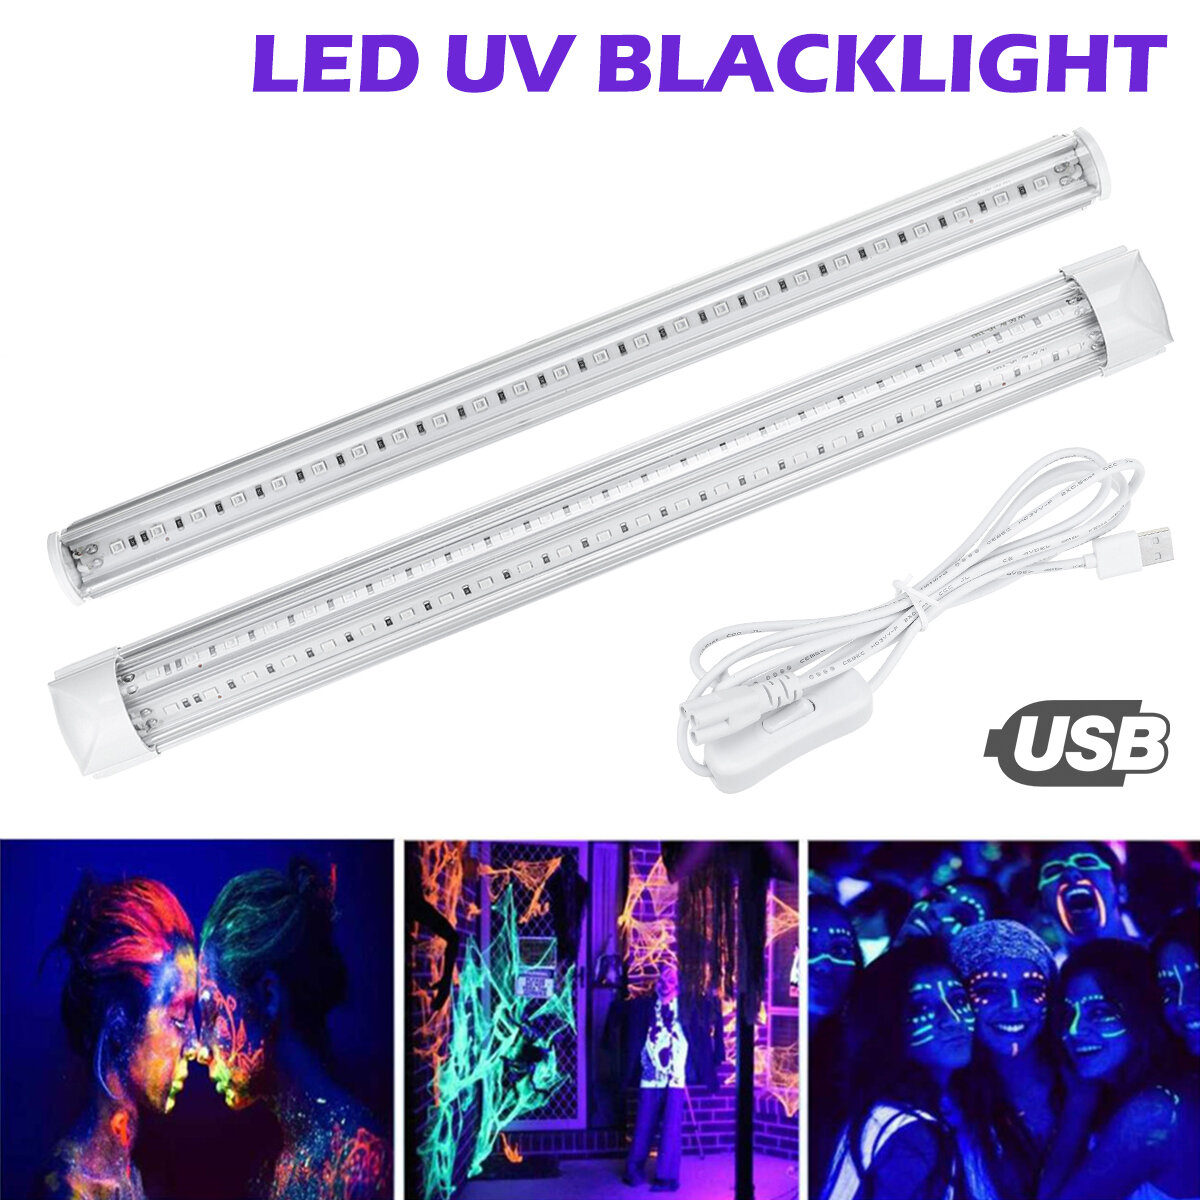 

36W USB UV Blacklight Bar Integrated 395NM T8 LED Tube Lamp Fluorescent Bulb Light Fixture